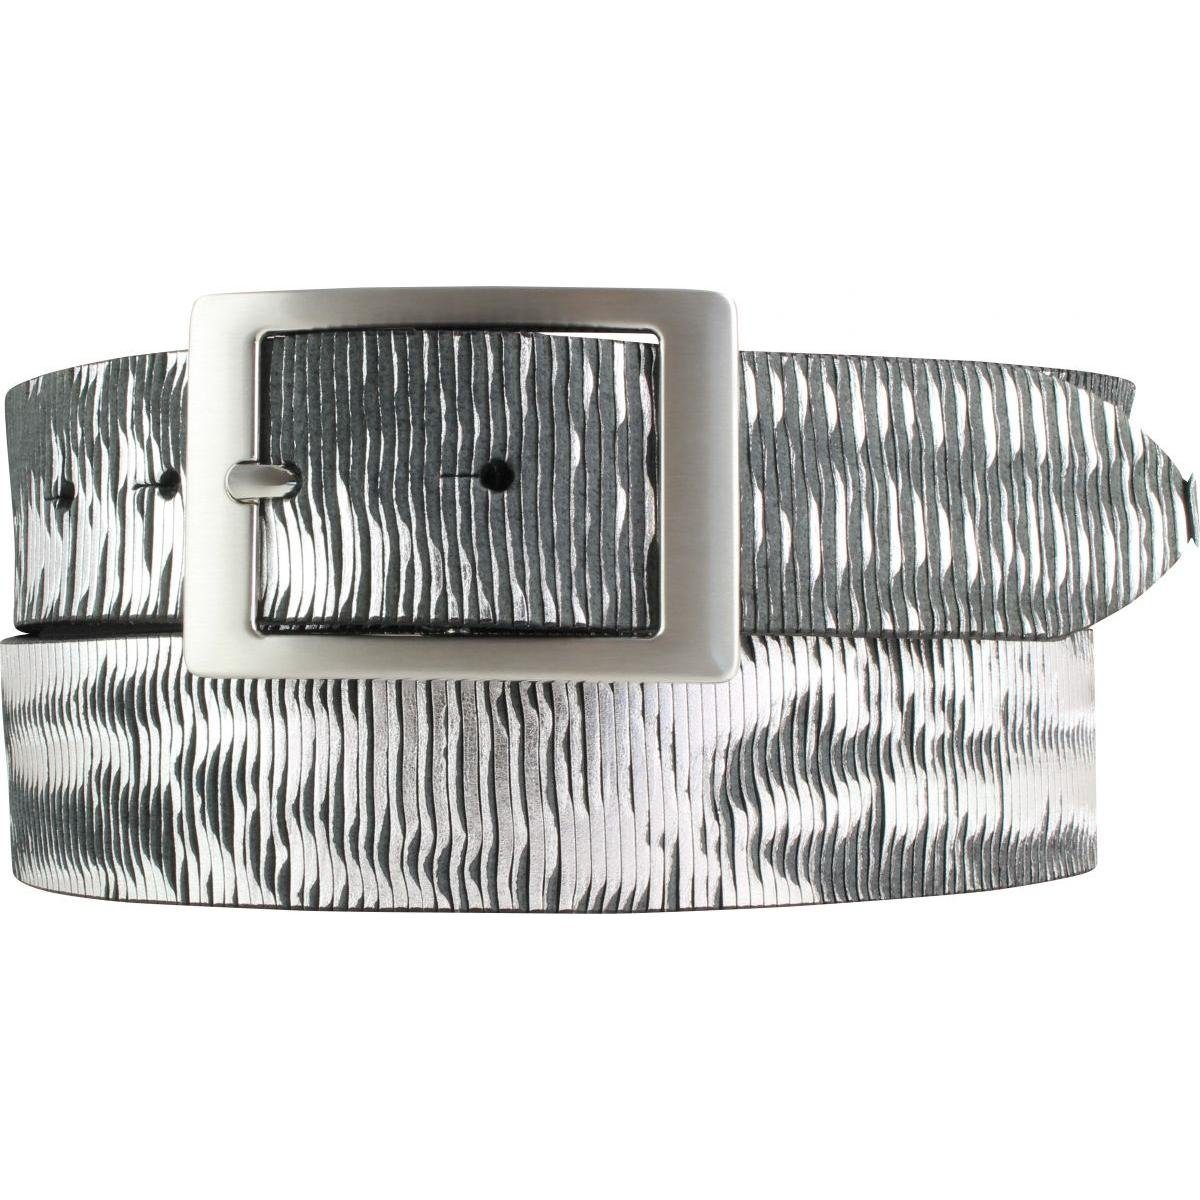 Doppel-Schließe Herren-Gürtel aus cm Silber mit Ledergürtel Vollrindleder 4 Schwarz Metall-Optik Metallik, BELTINGER